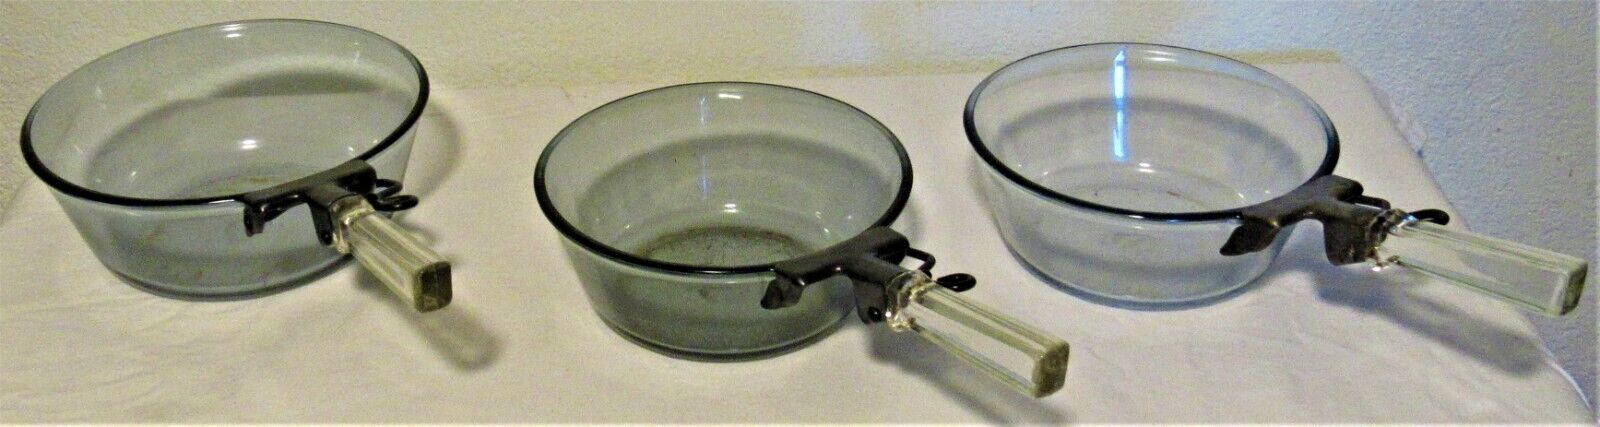 (3) Pyrex Flameware Cookware Glass Pots 832-B & 833-B - Removable Glass Handles